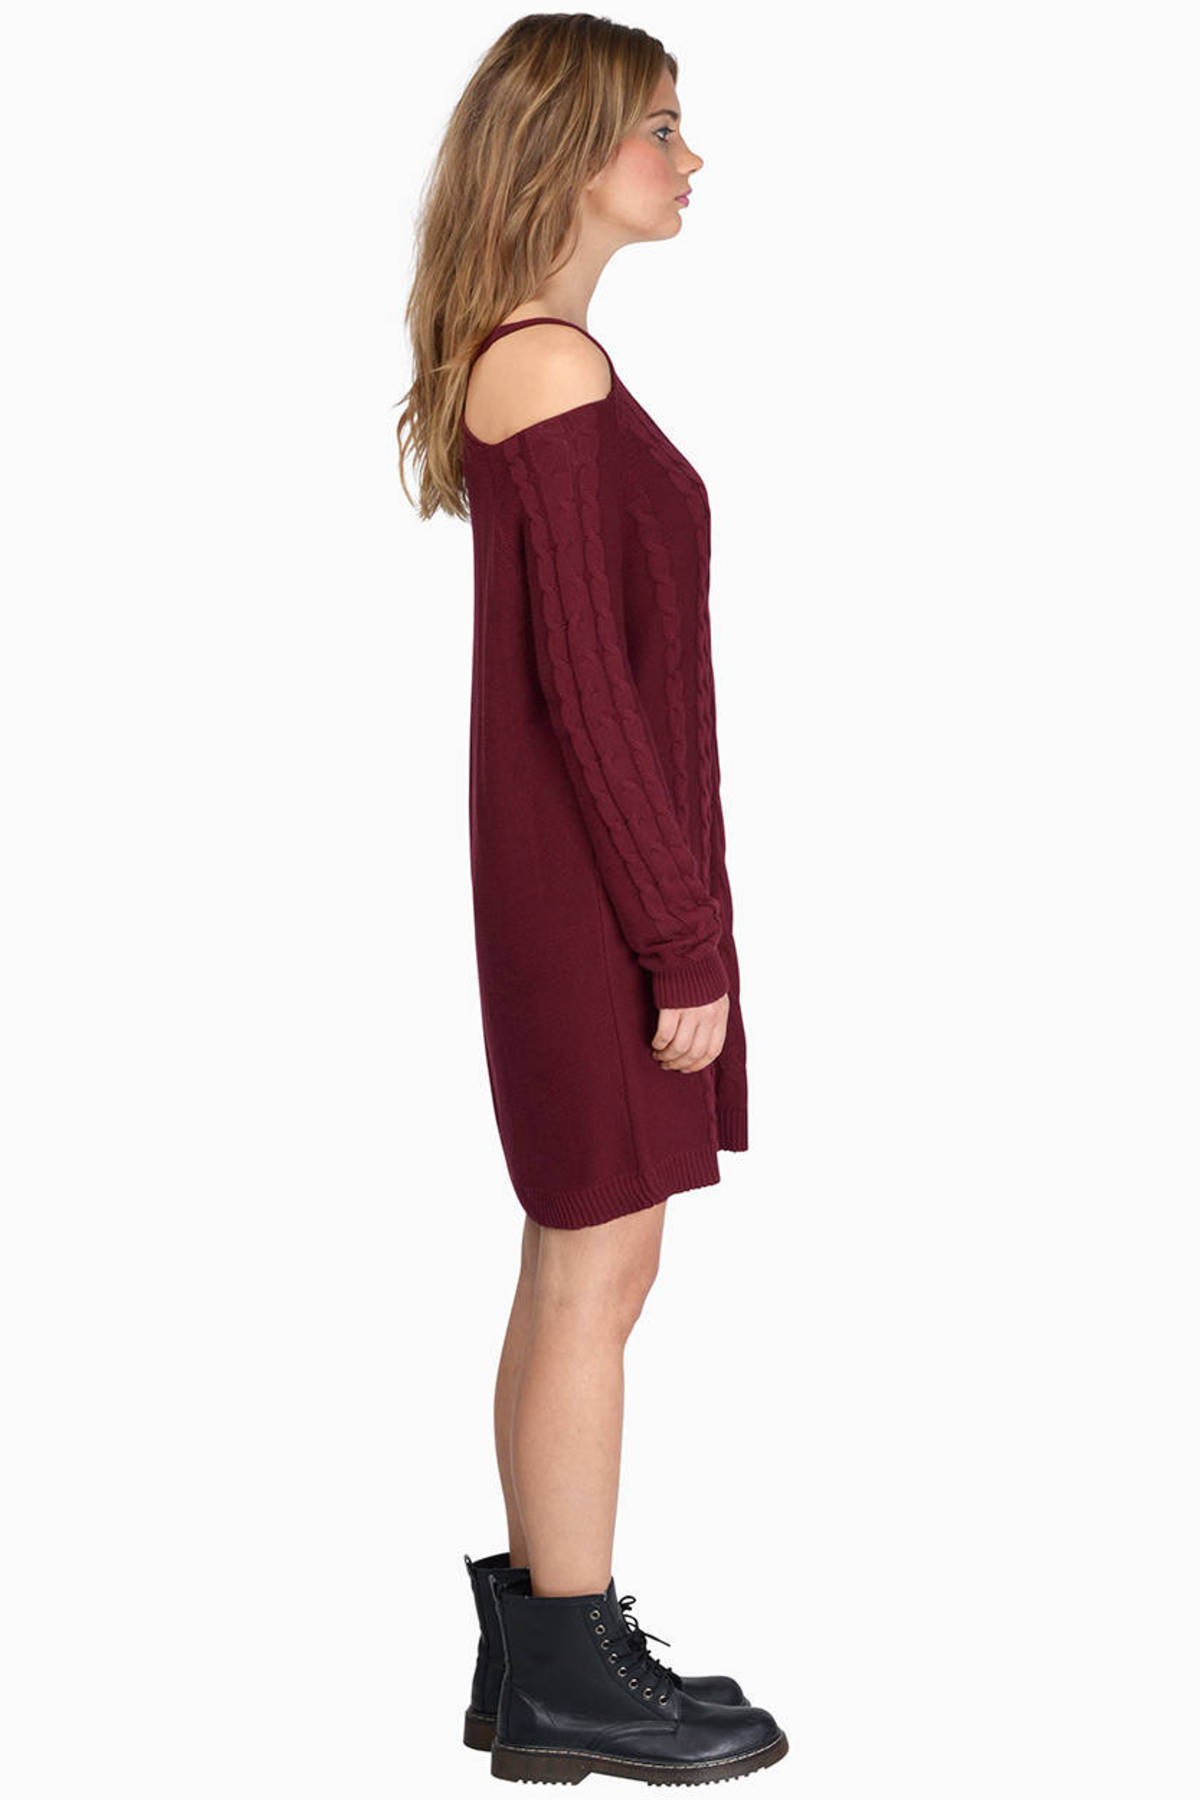 Cabin Fever Sweater Dress in Burgundy - $68 | Tobi US